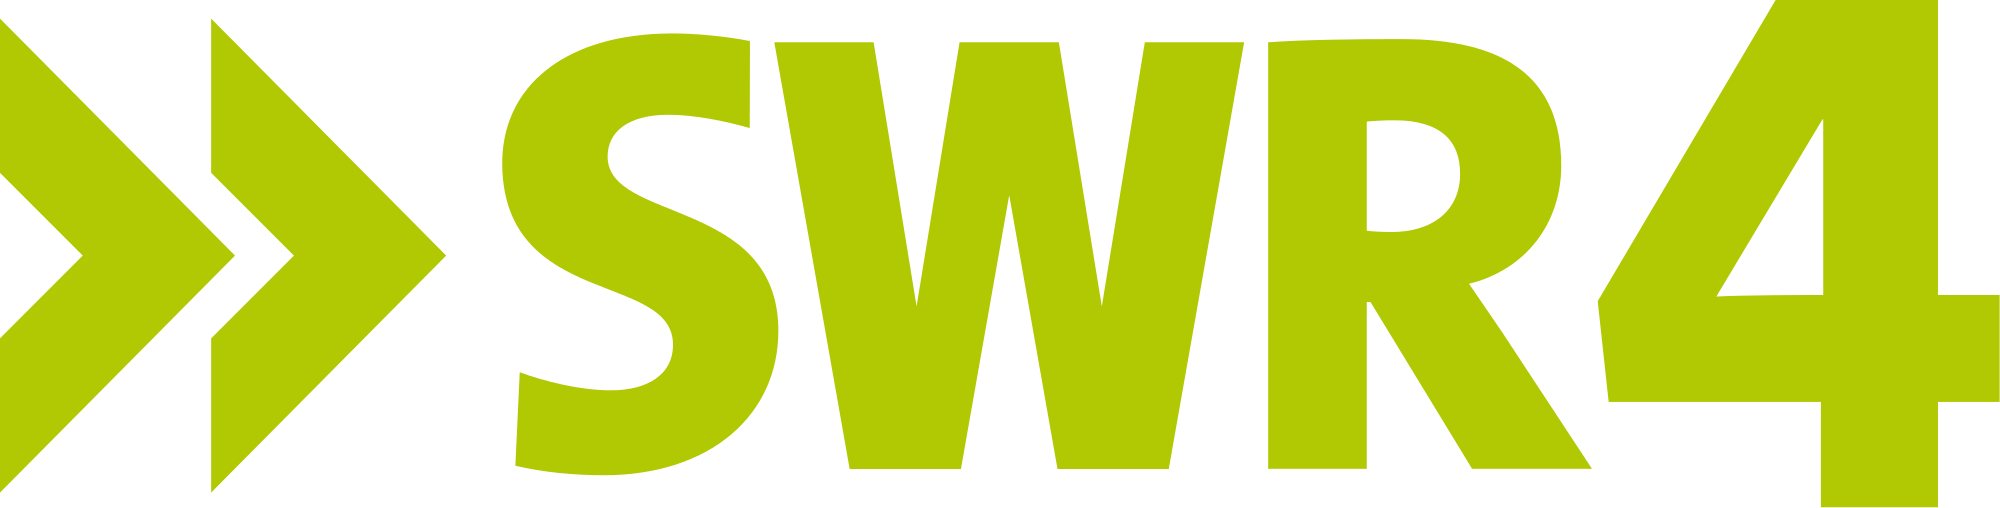 Swr4-logo.svg